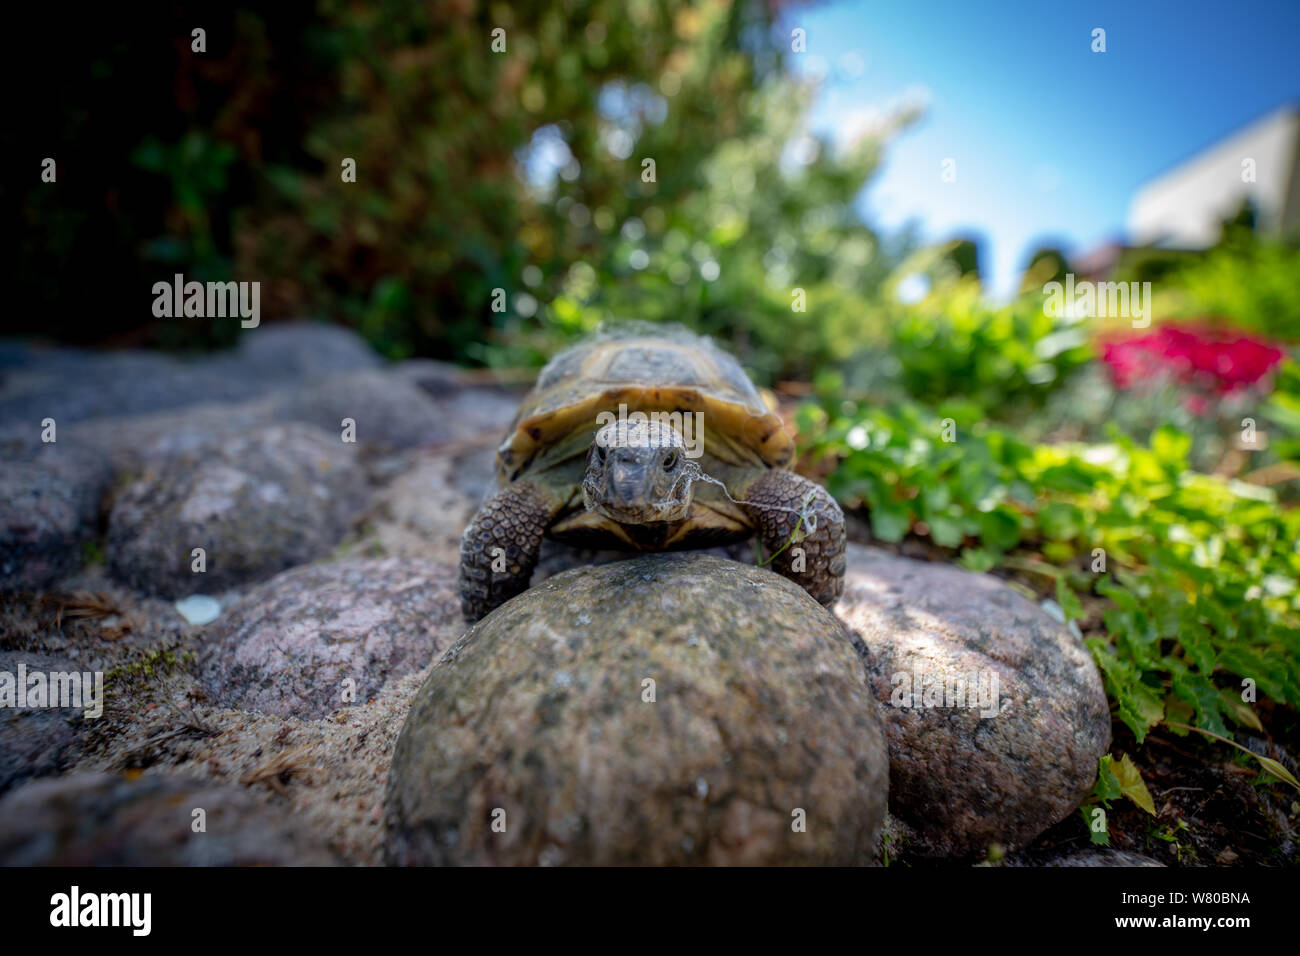 Russian tortoise exploring garden Stock Photo